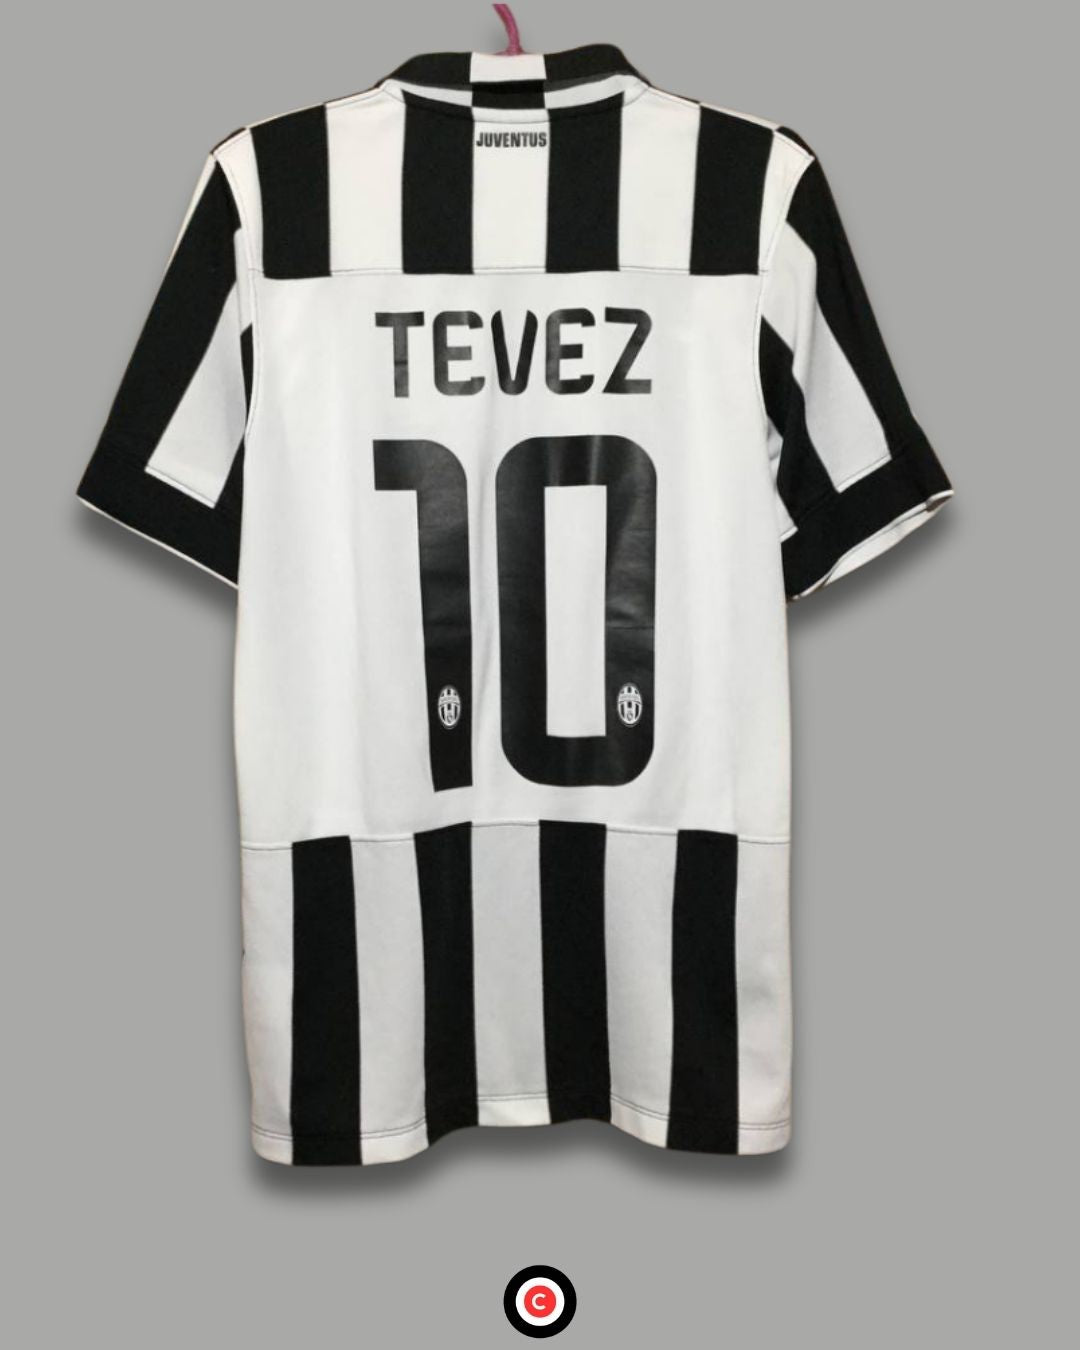 Juventus 14/15 (Home Kit) - Premium  from CatenaccioDesigns - Just €60.99! Shop now at CatenaccioDesigns